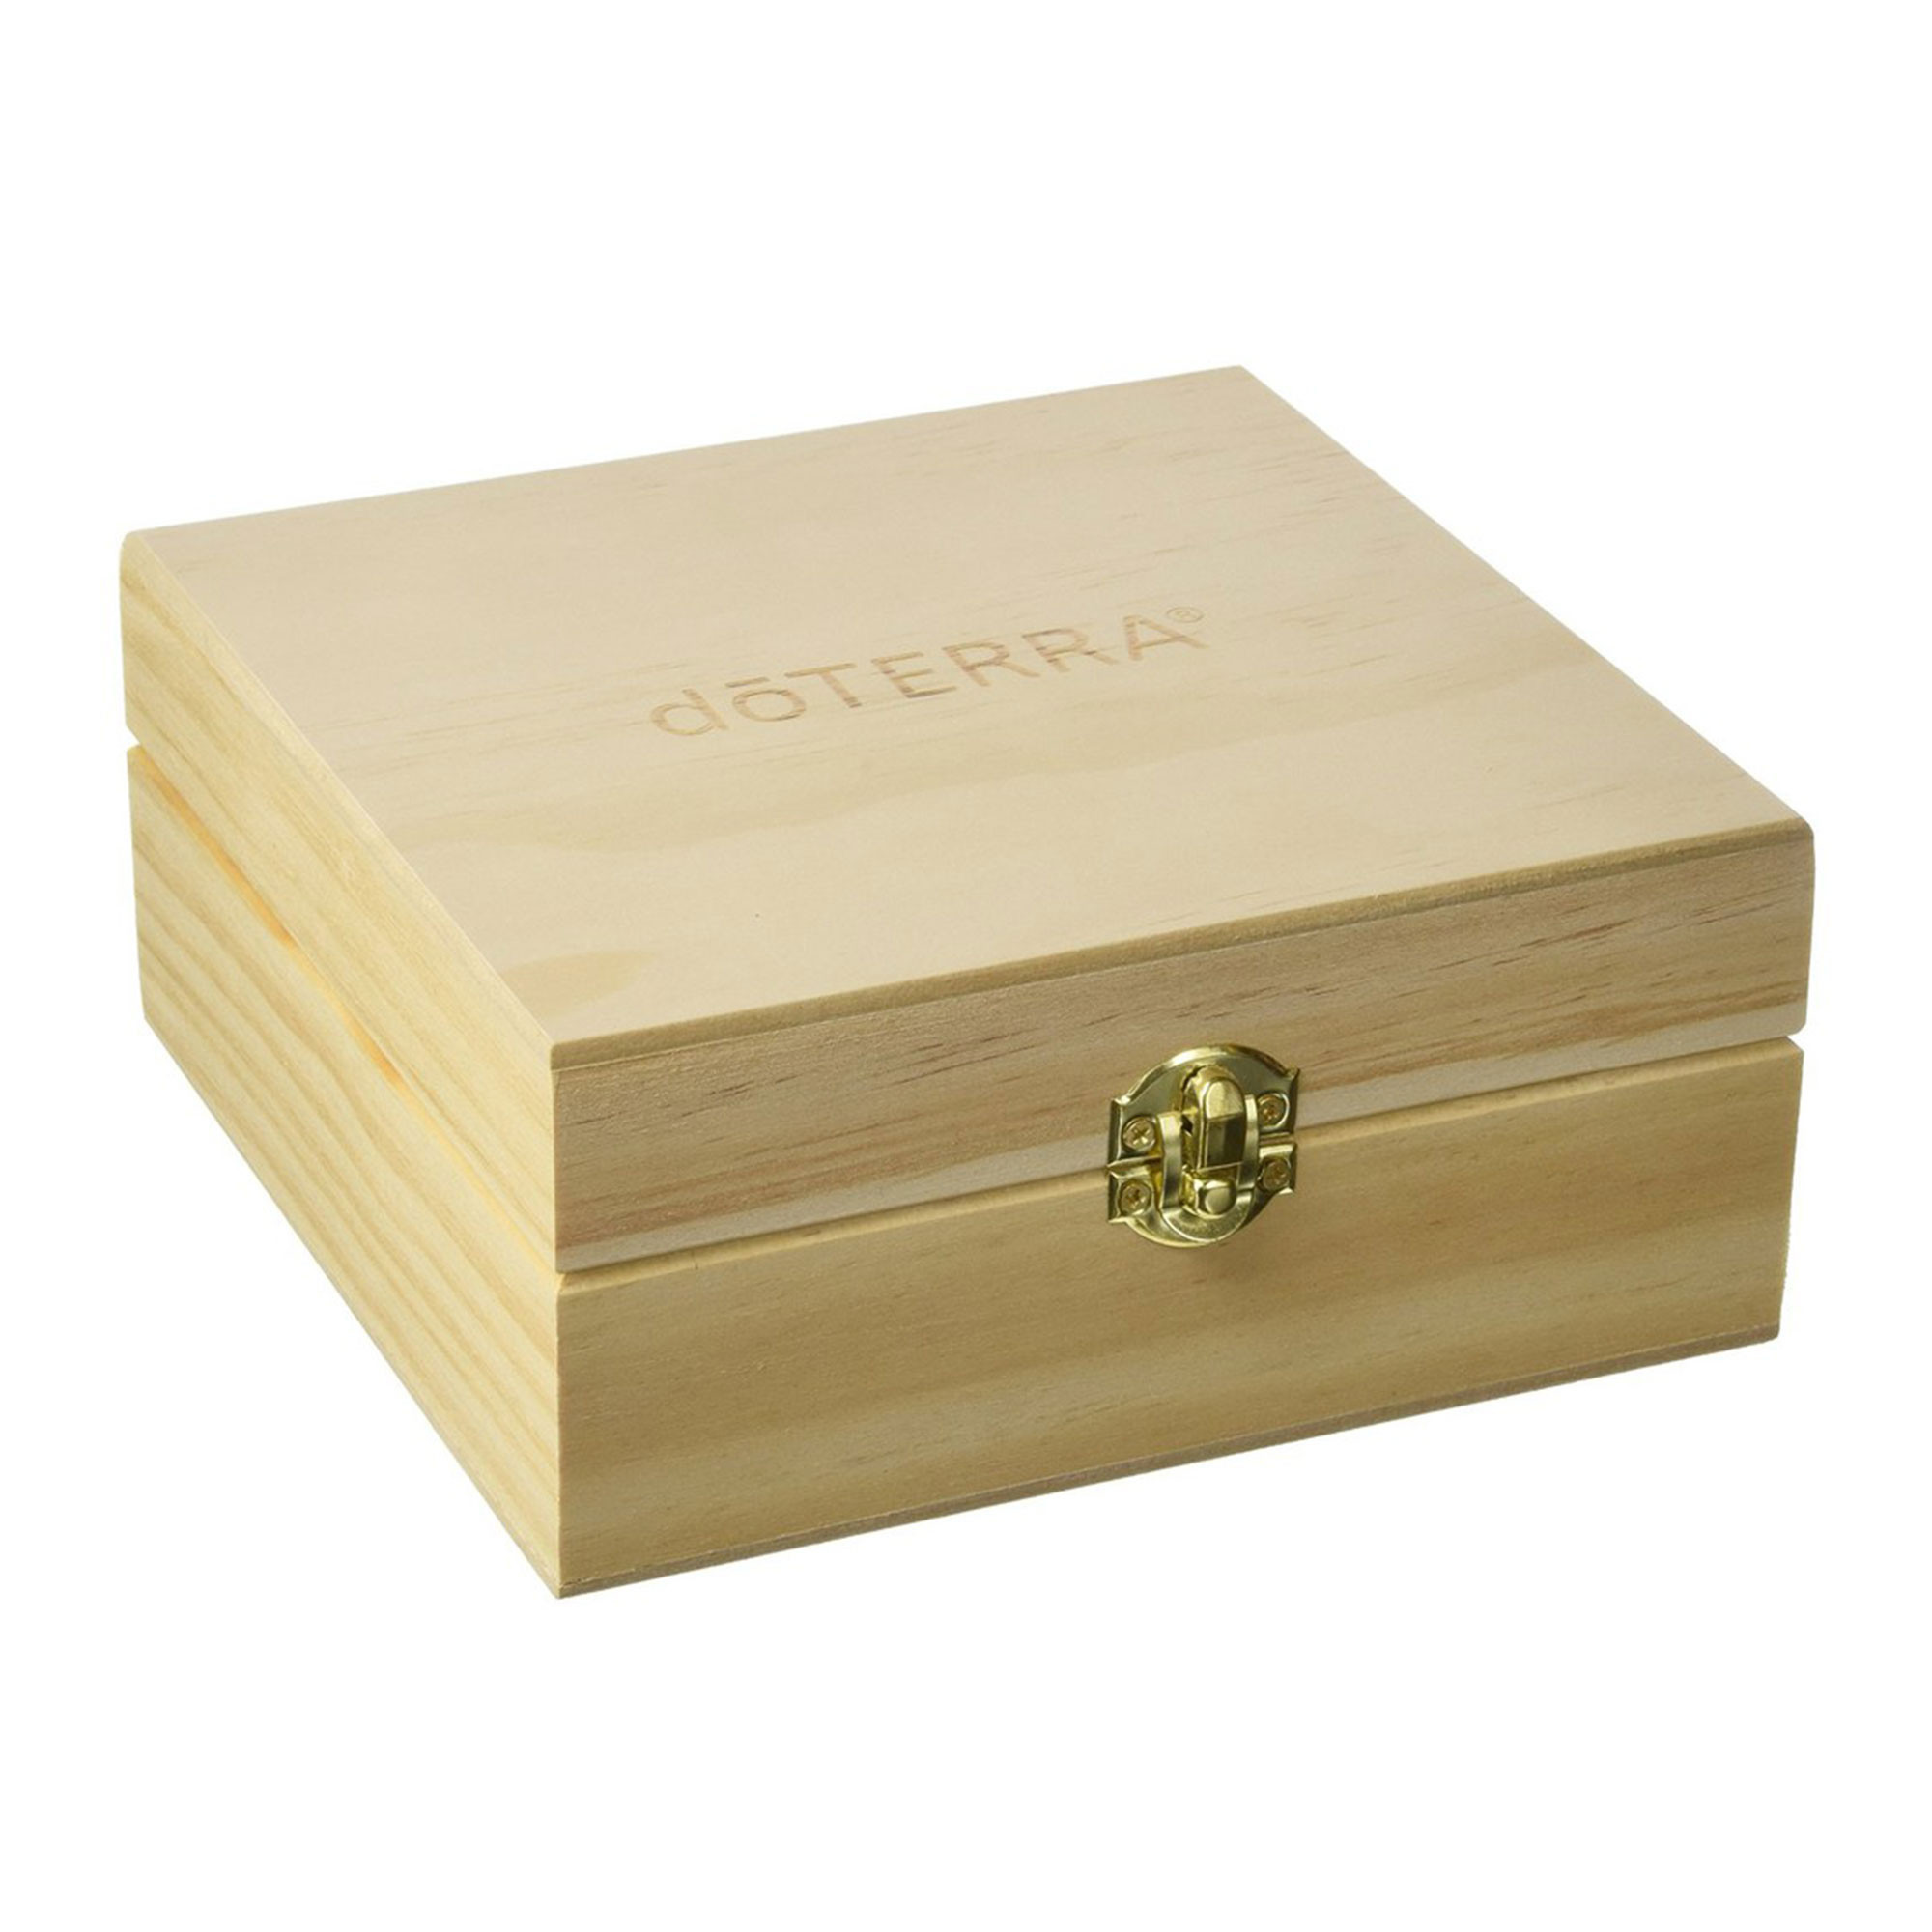 DoTERRA Logo Engraved Wooden Box - Деревянная шкатулка для хранения масел купить